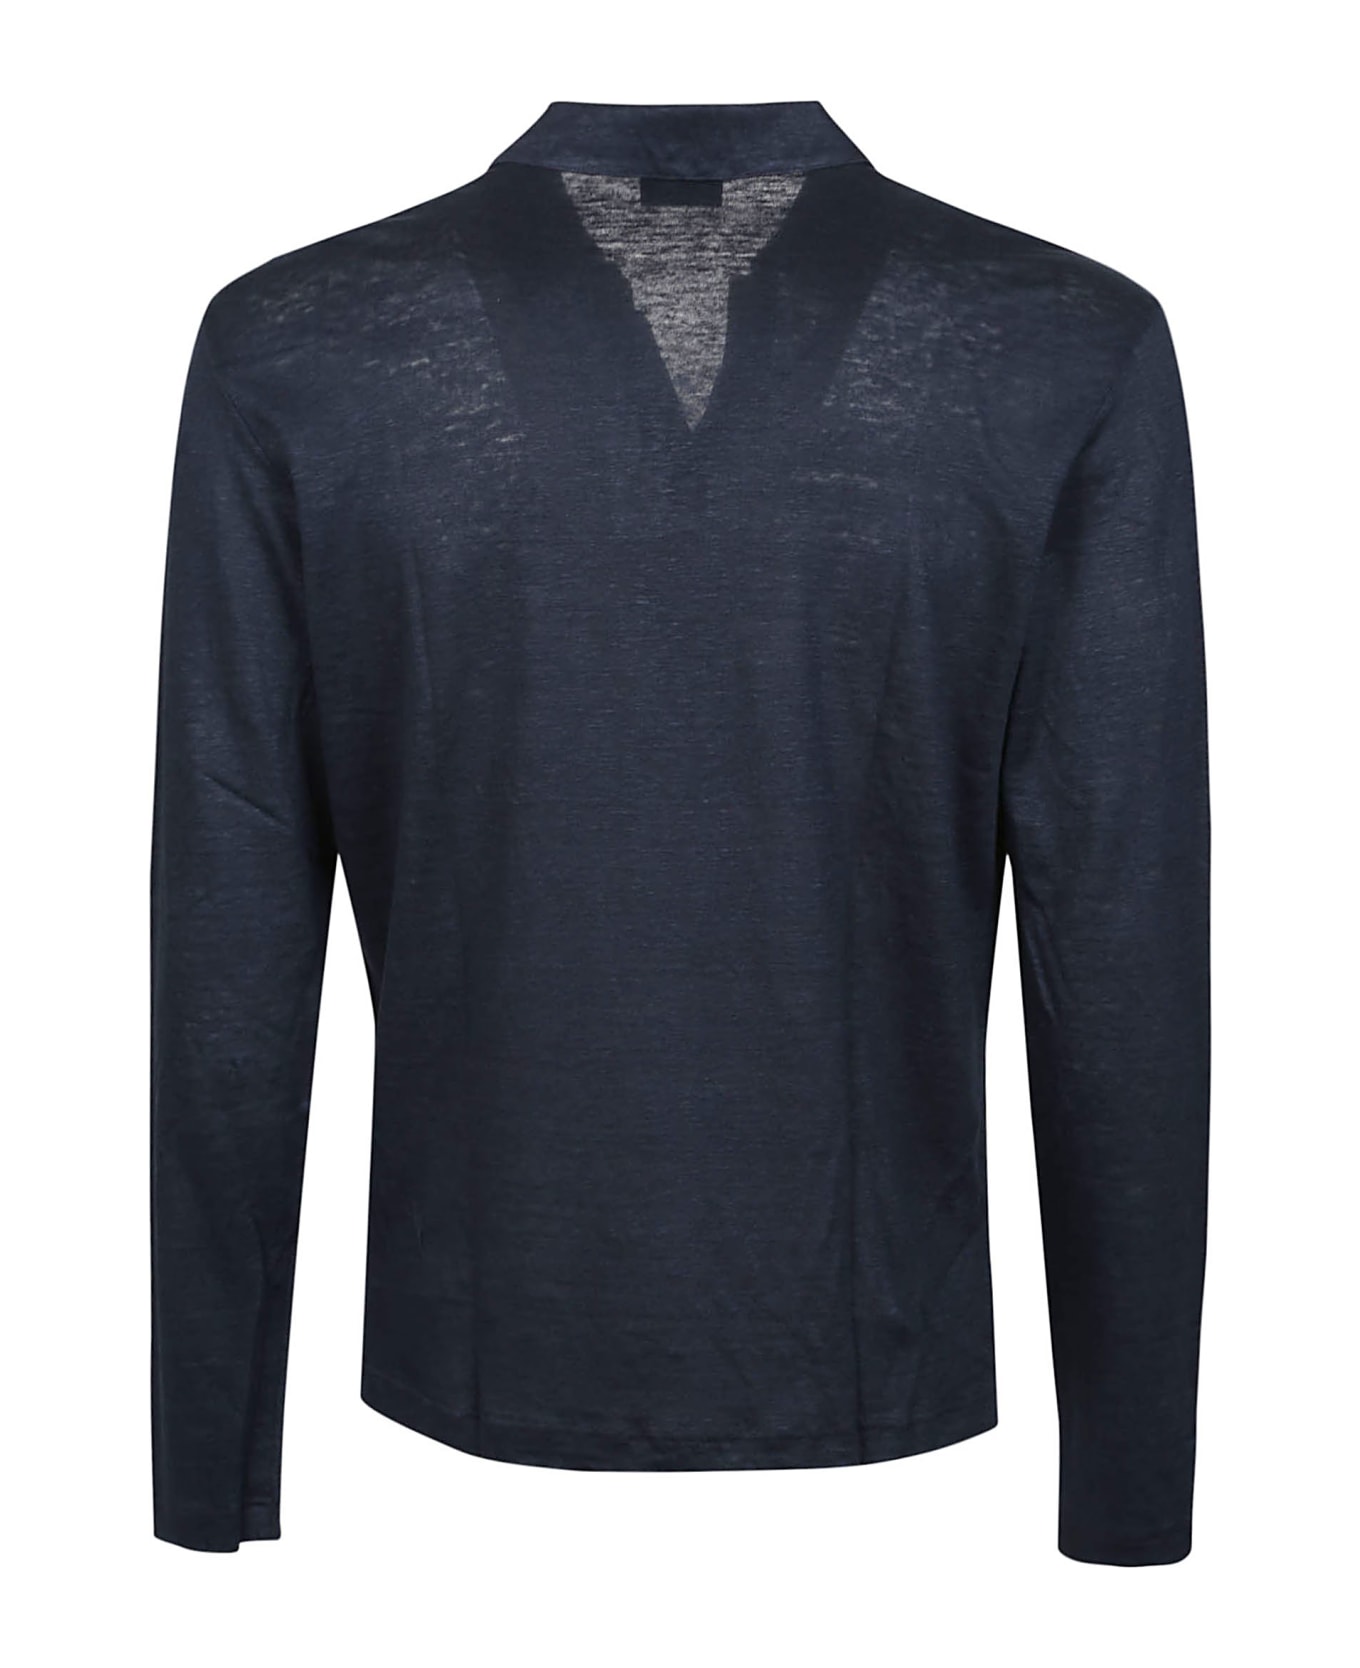 Barba Napoli Short Sleeve Polo Shirt - Blu ポロシャツ